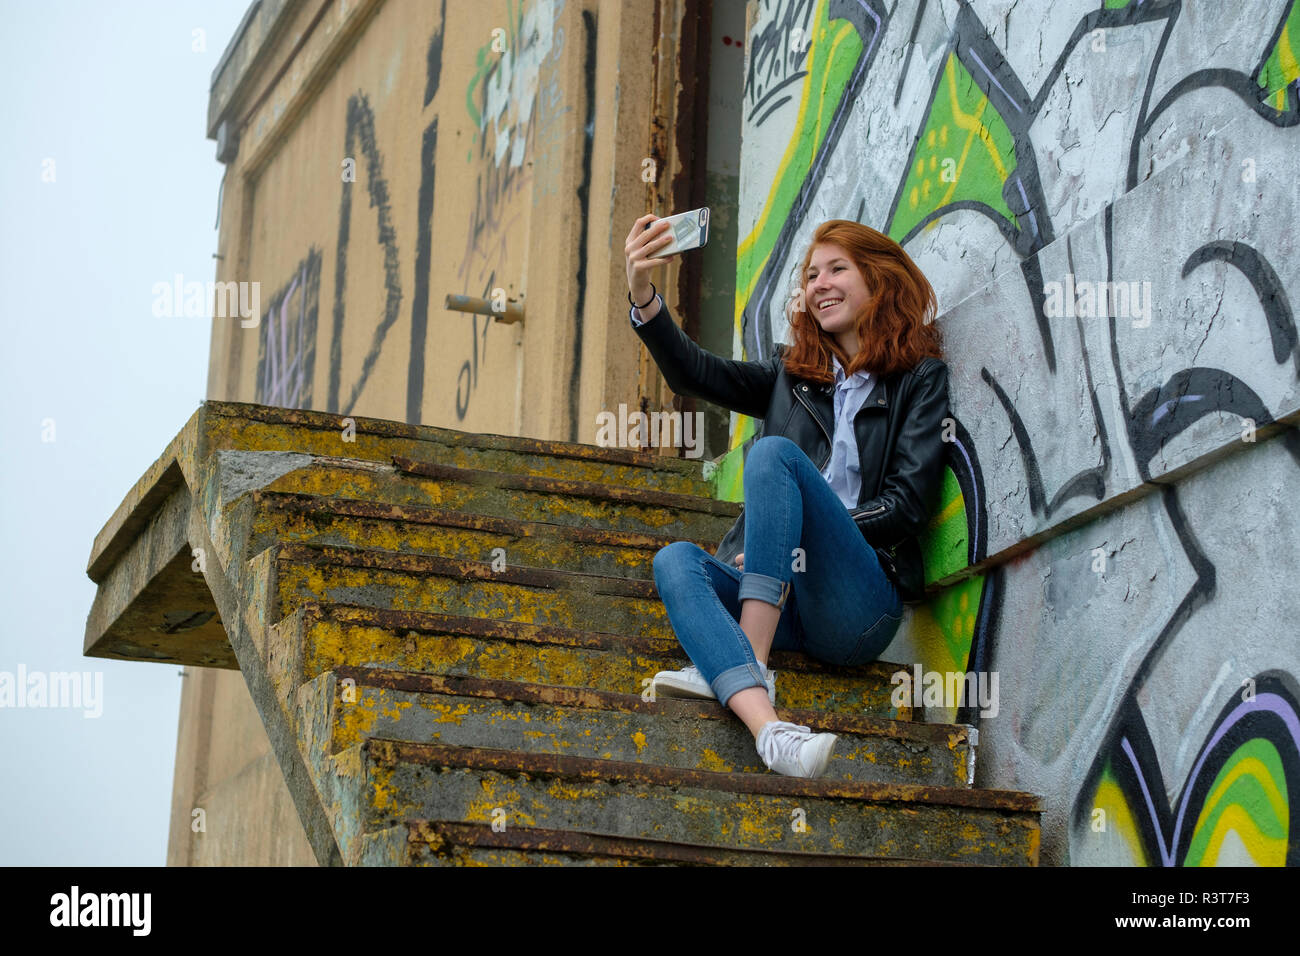 Italien, Finale Ligure, rothaarige Mädchen im Teenageralter ltaking selfie vor Graffiti an der Wand Stockfoto